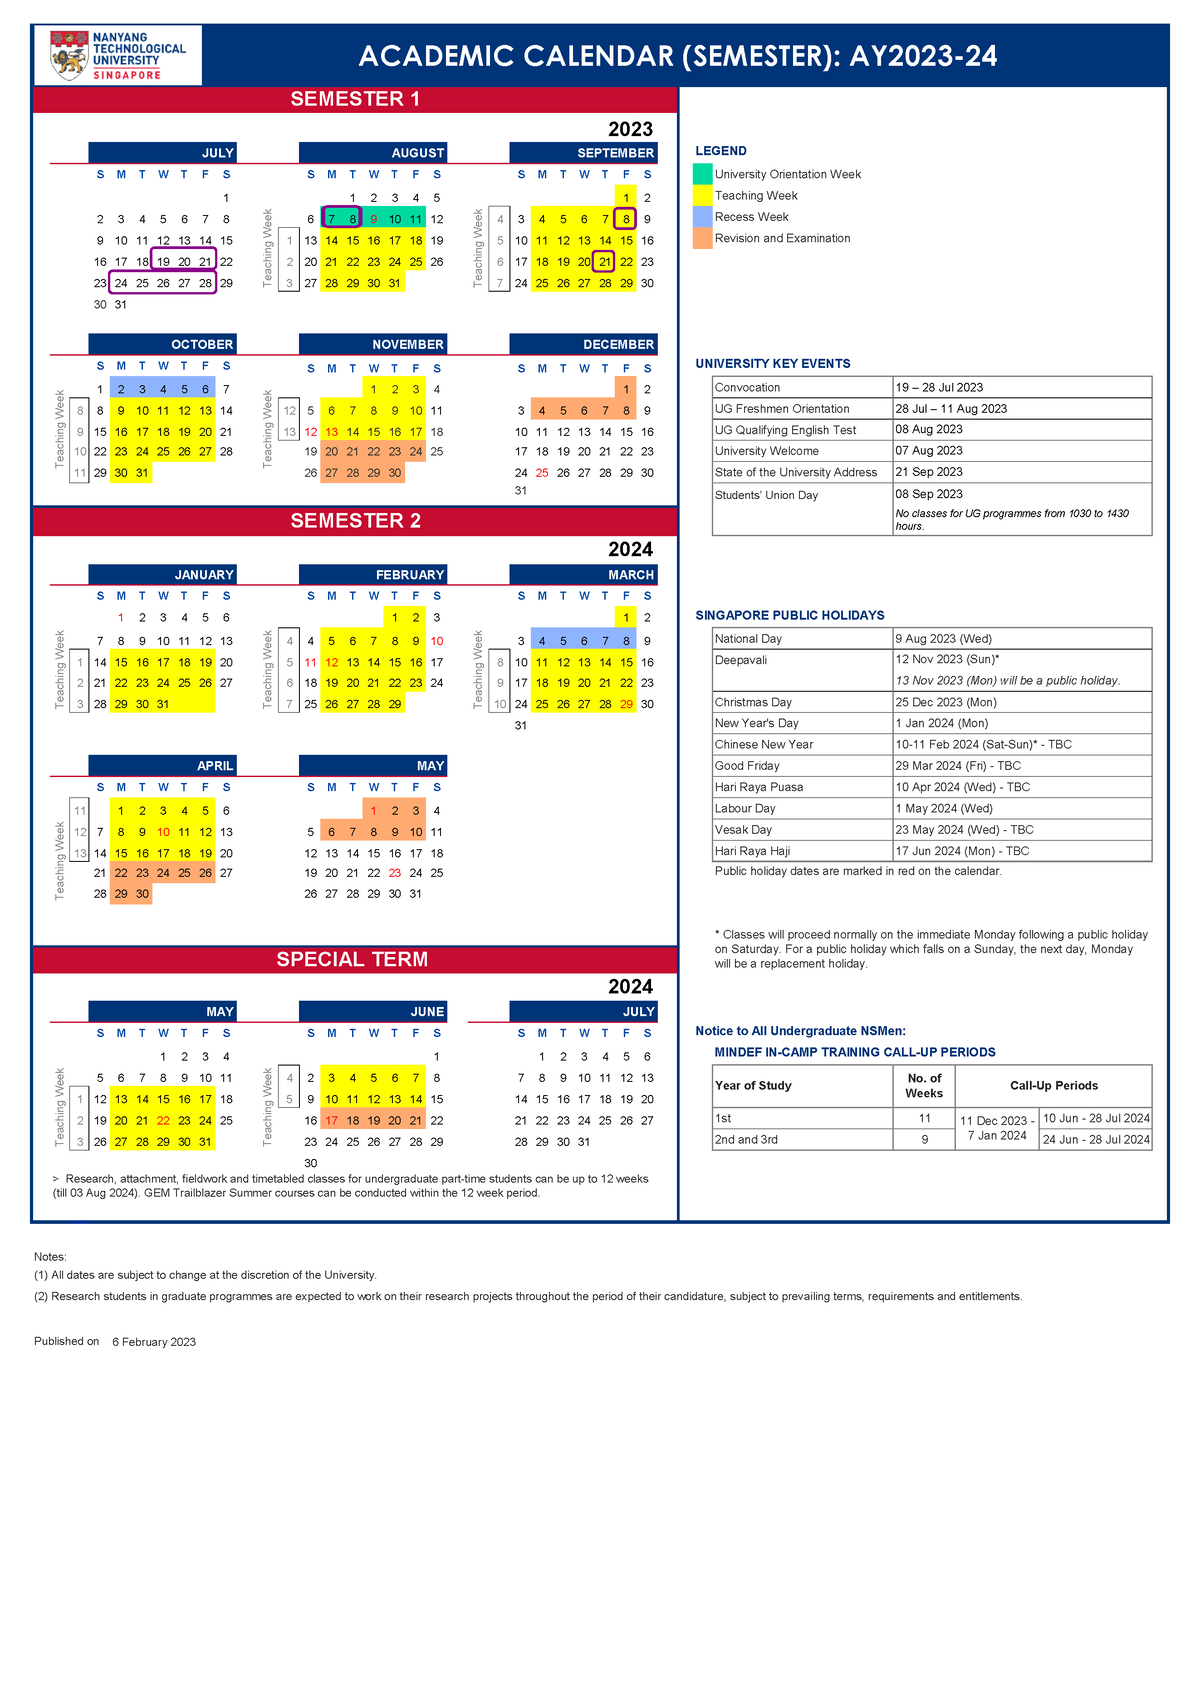 NTU Academic Calendar AY2023 24 (Semester) JULY AUGUST SEPTEMBER S M